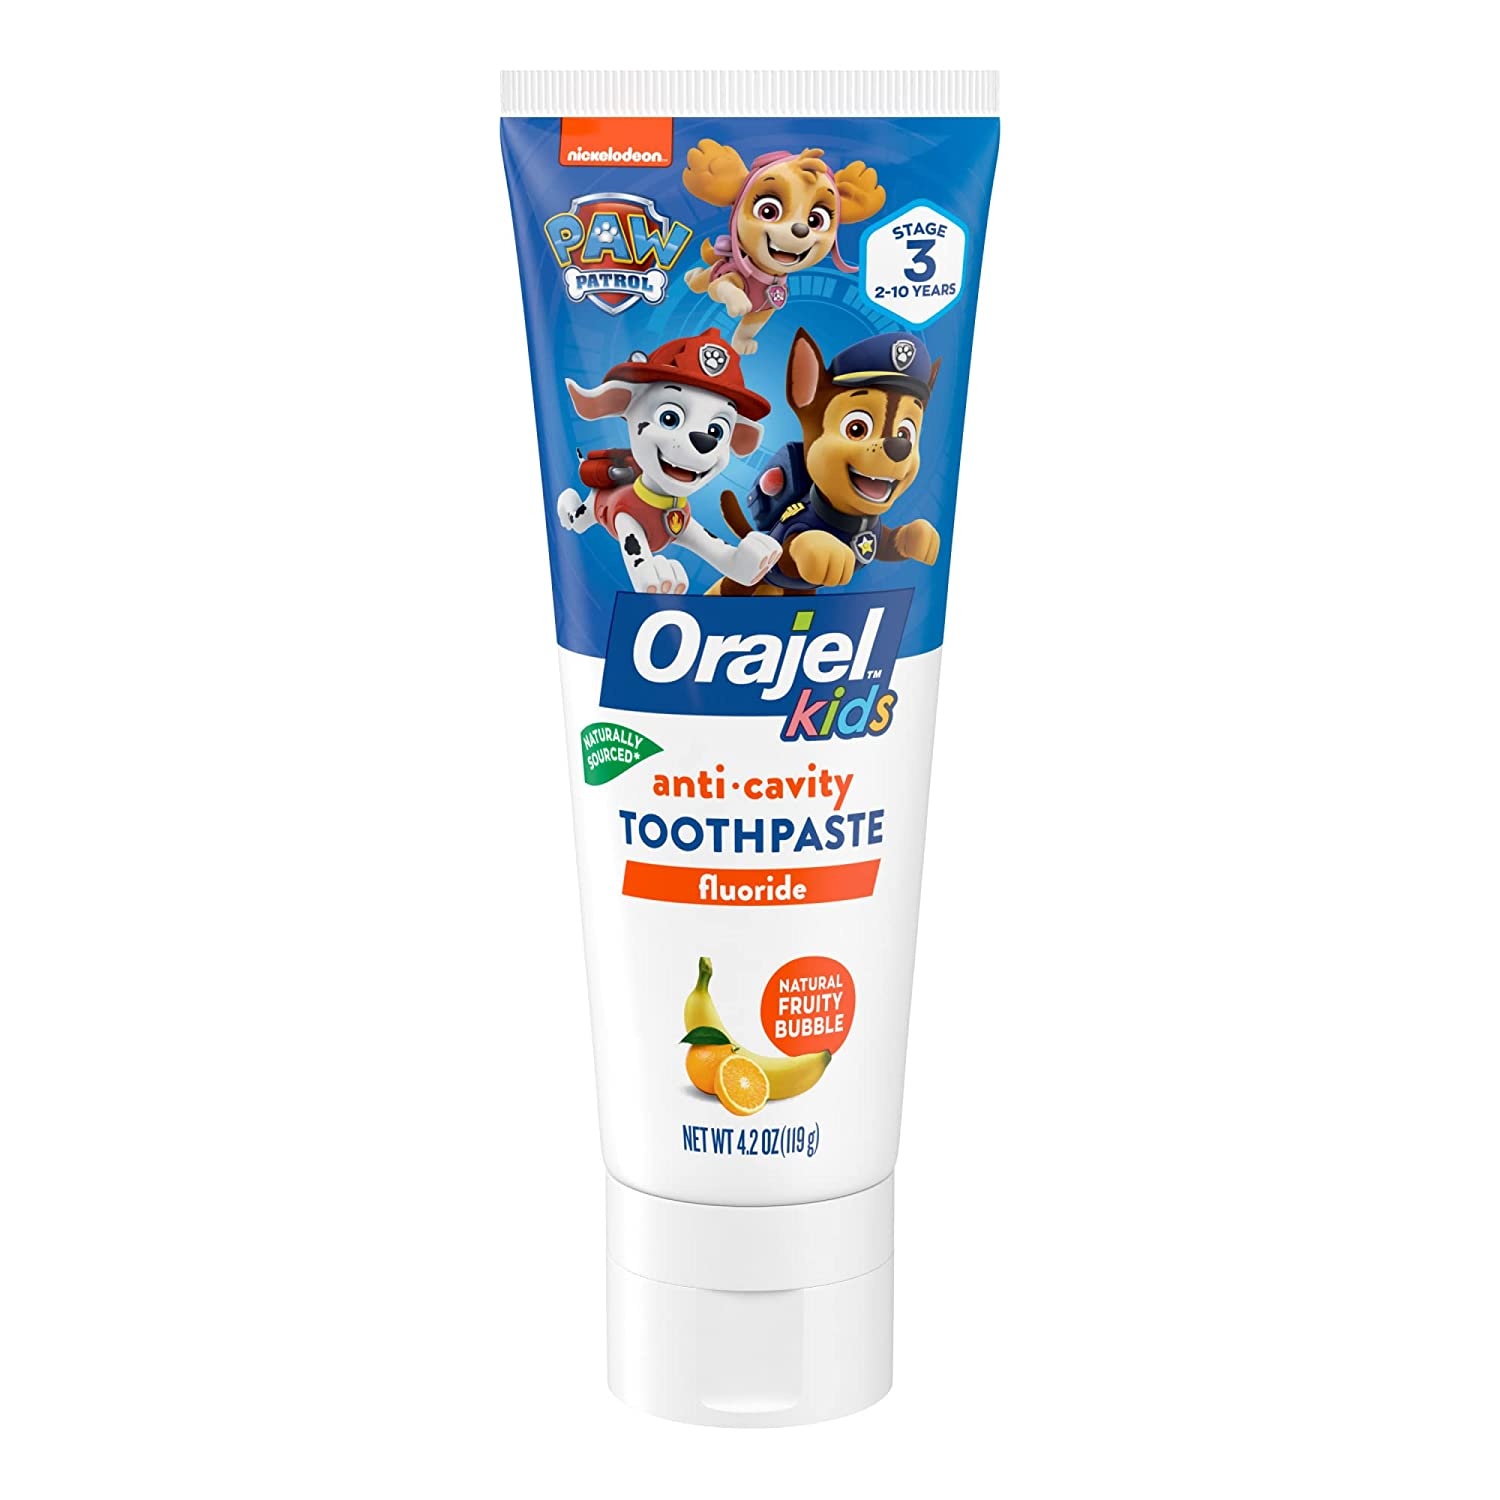 Amazon.com : Orajel Kids Paw Patrol Anti-Cavity Fluoride Toothpaste, Natural Fruity Bubble Flavor, 4.2oz Tube : Health & Household $1.99